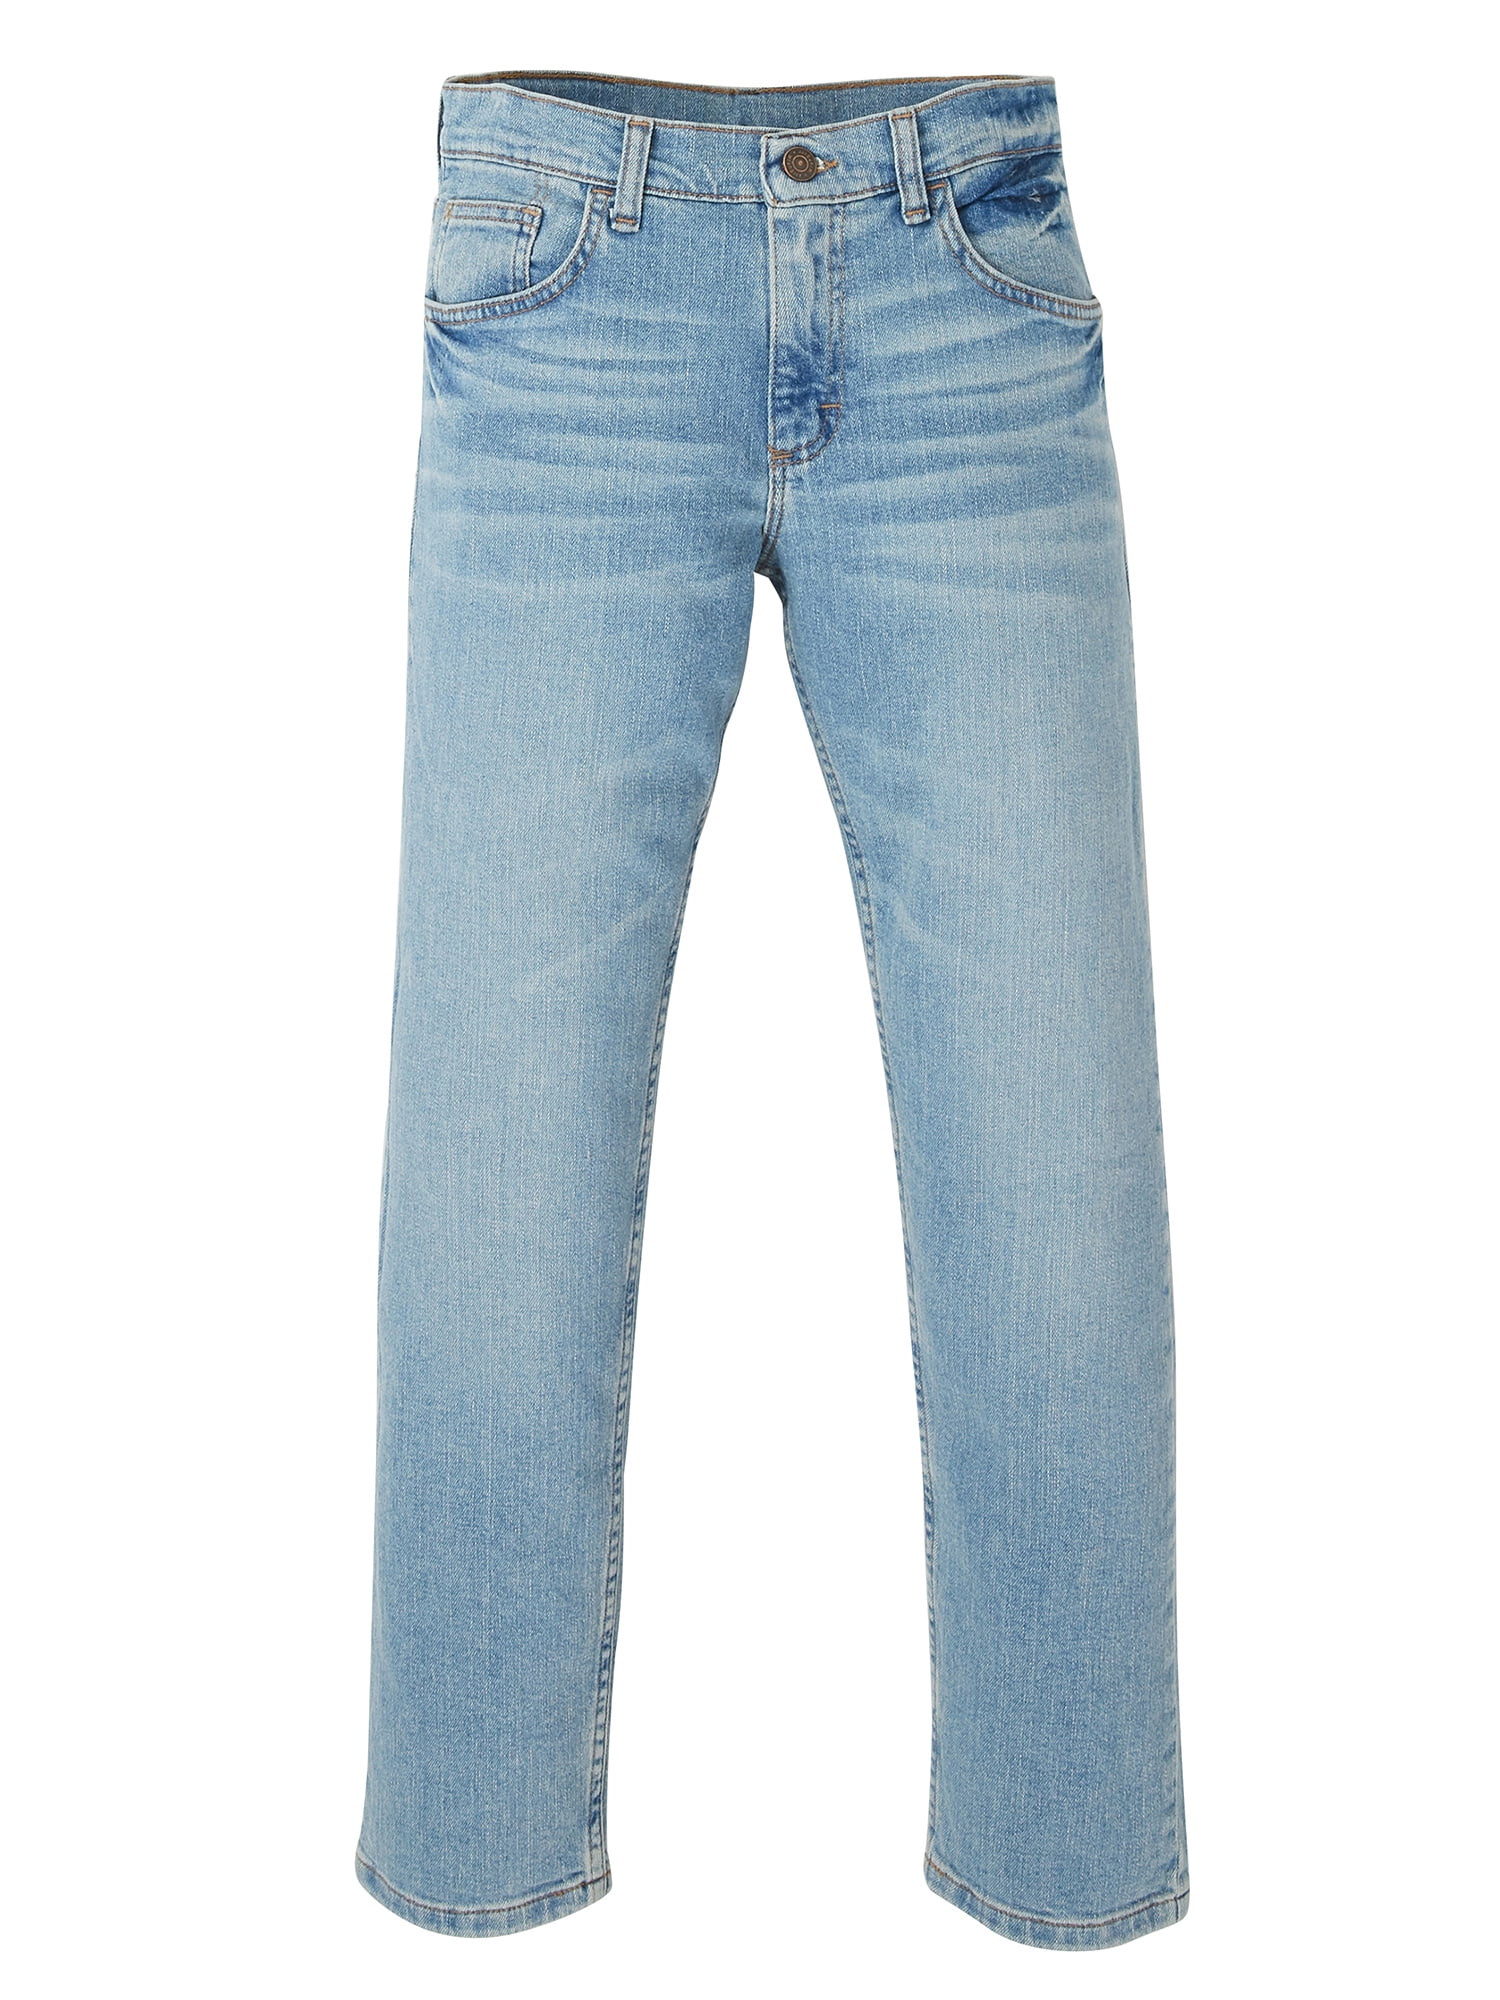 Blue Royal, Size 16 Regular Wrangler Boys Performance Jeans wih Adjustable Waist